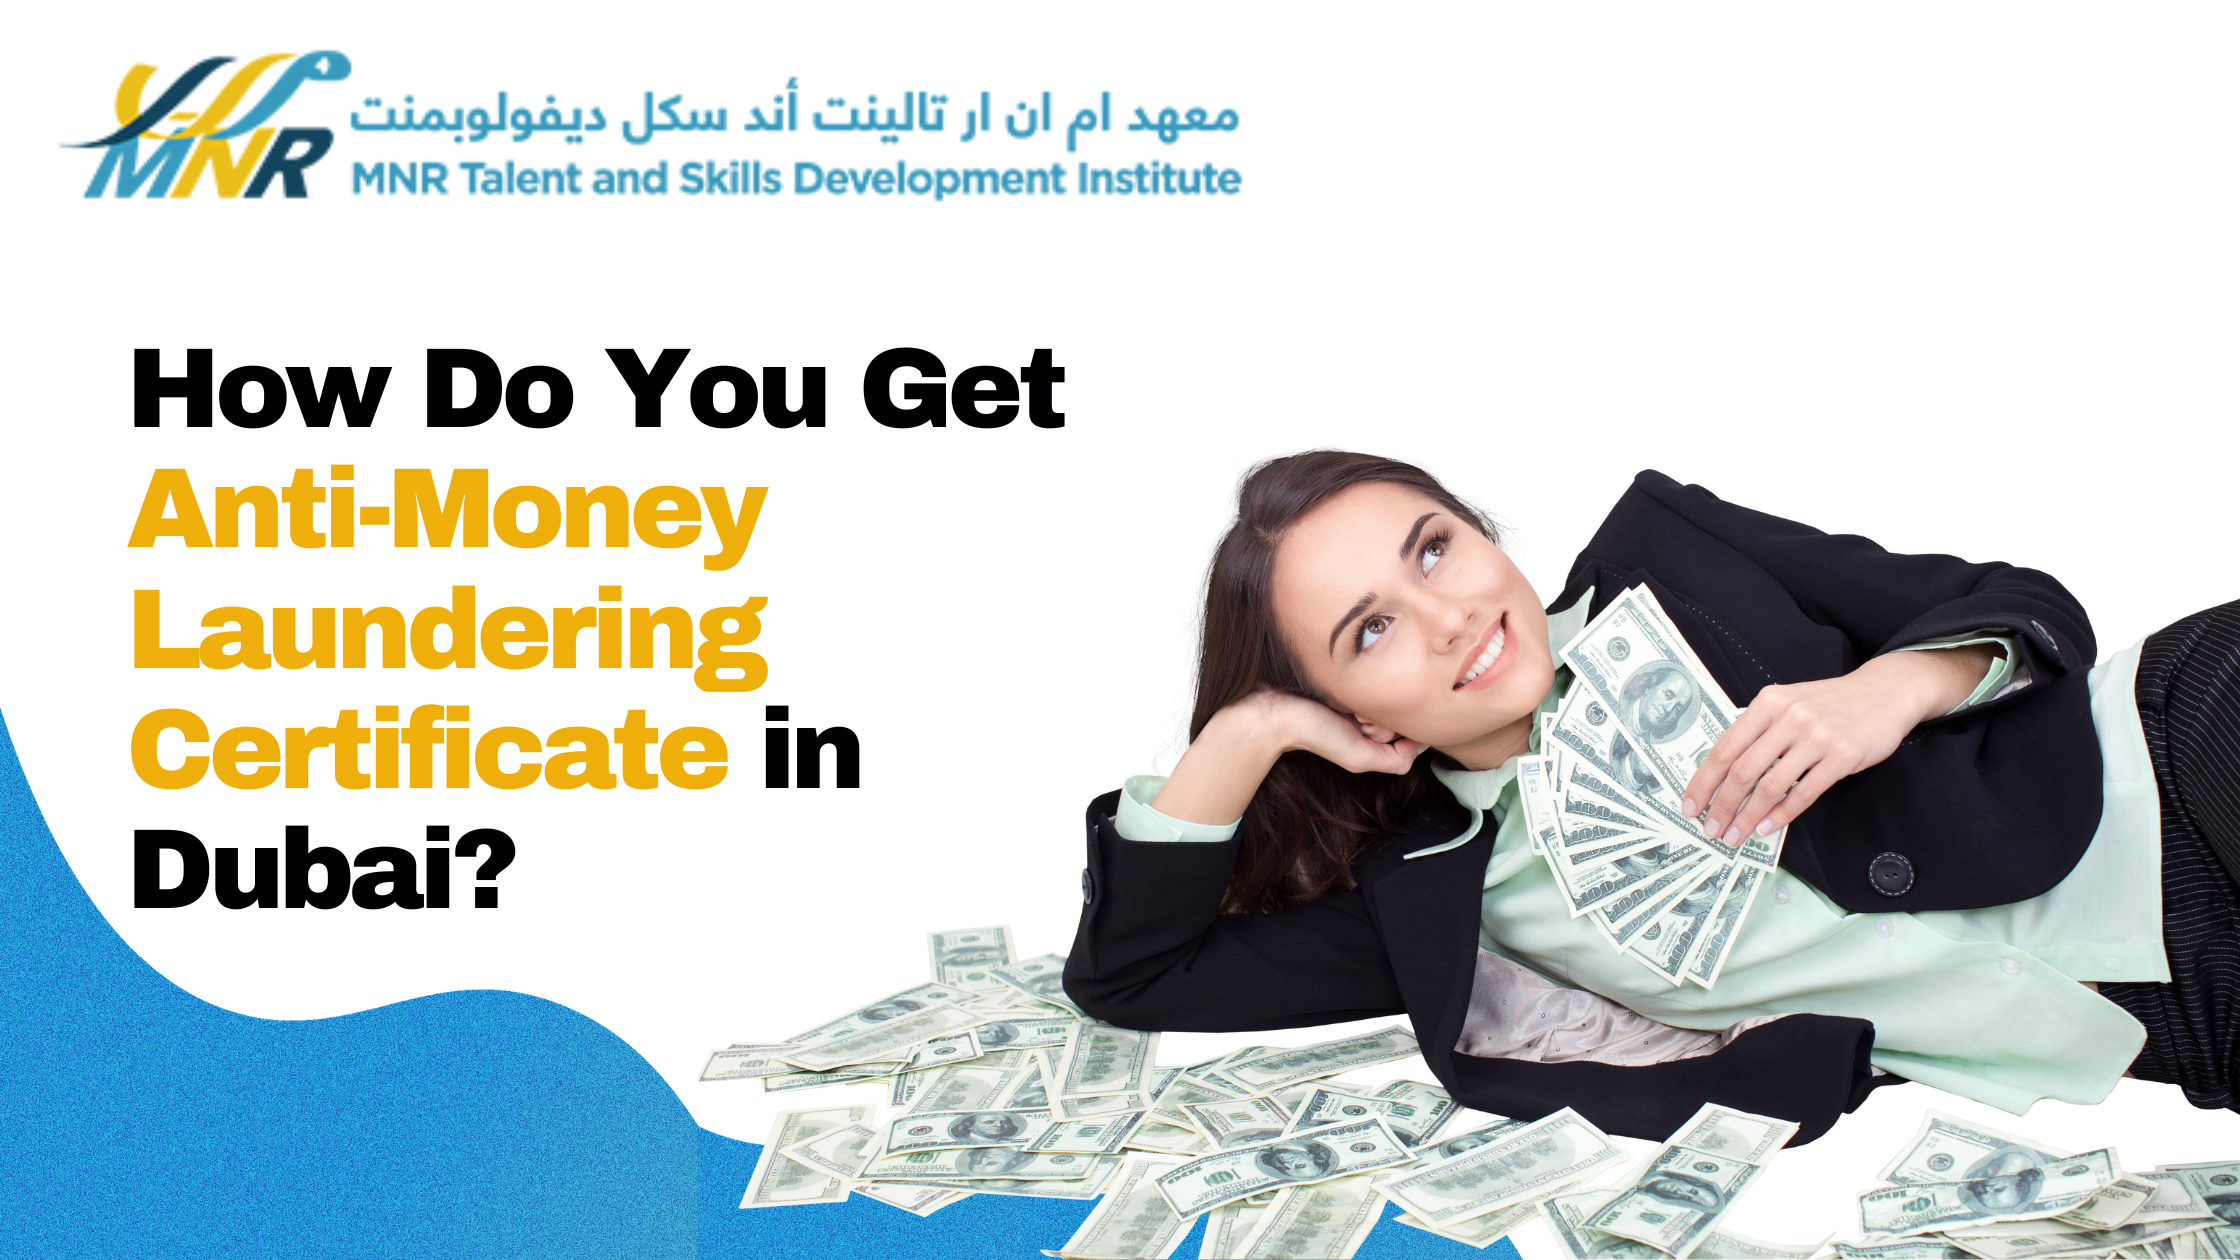 How Do You Get Anti-Money Laundering Certificate in Dubai?